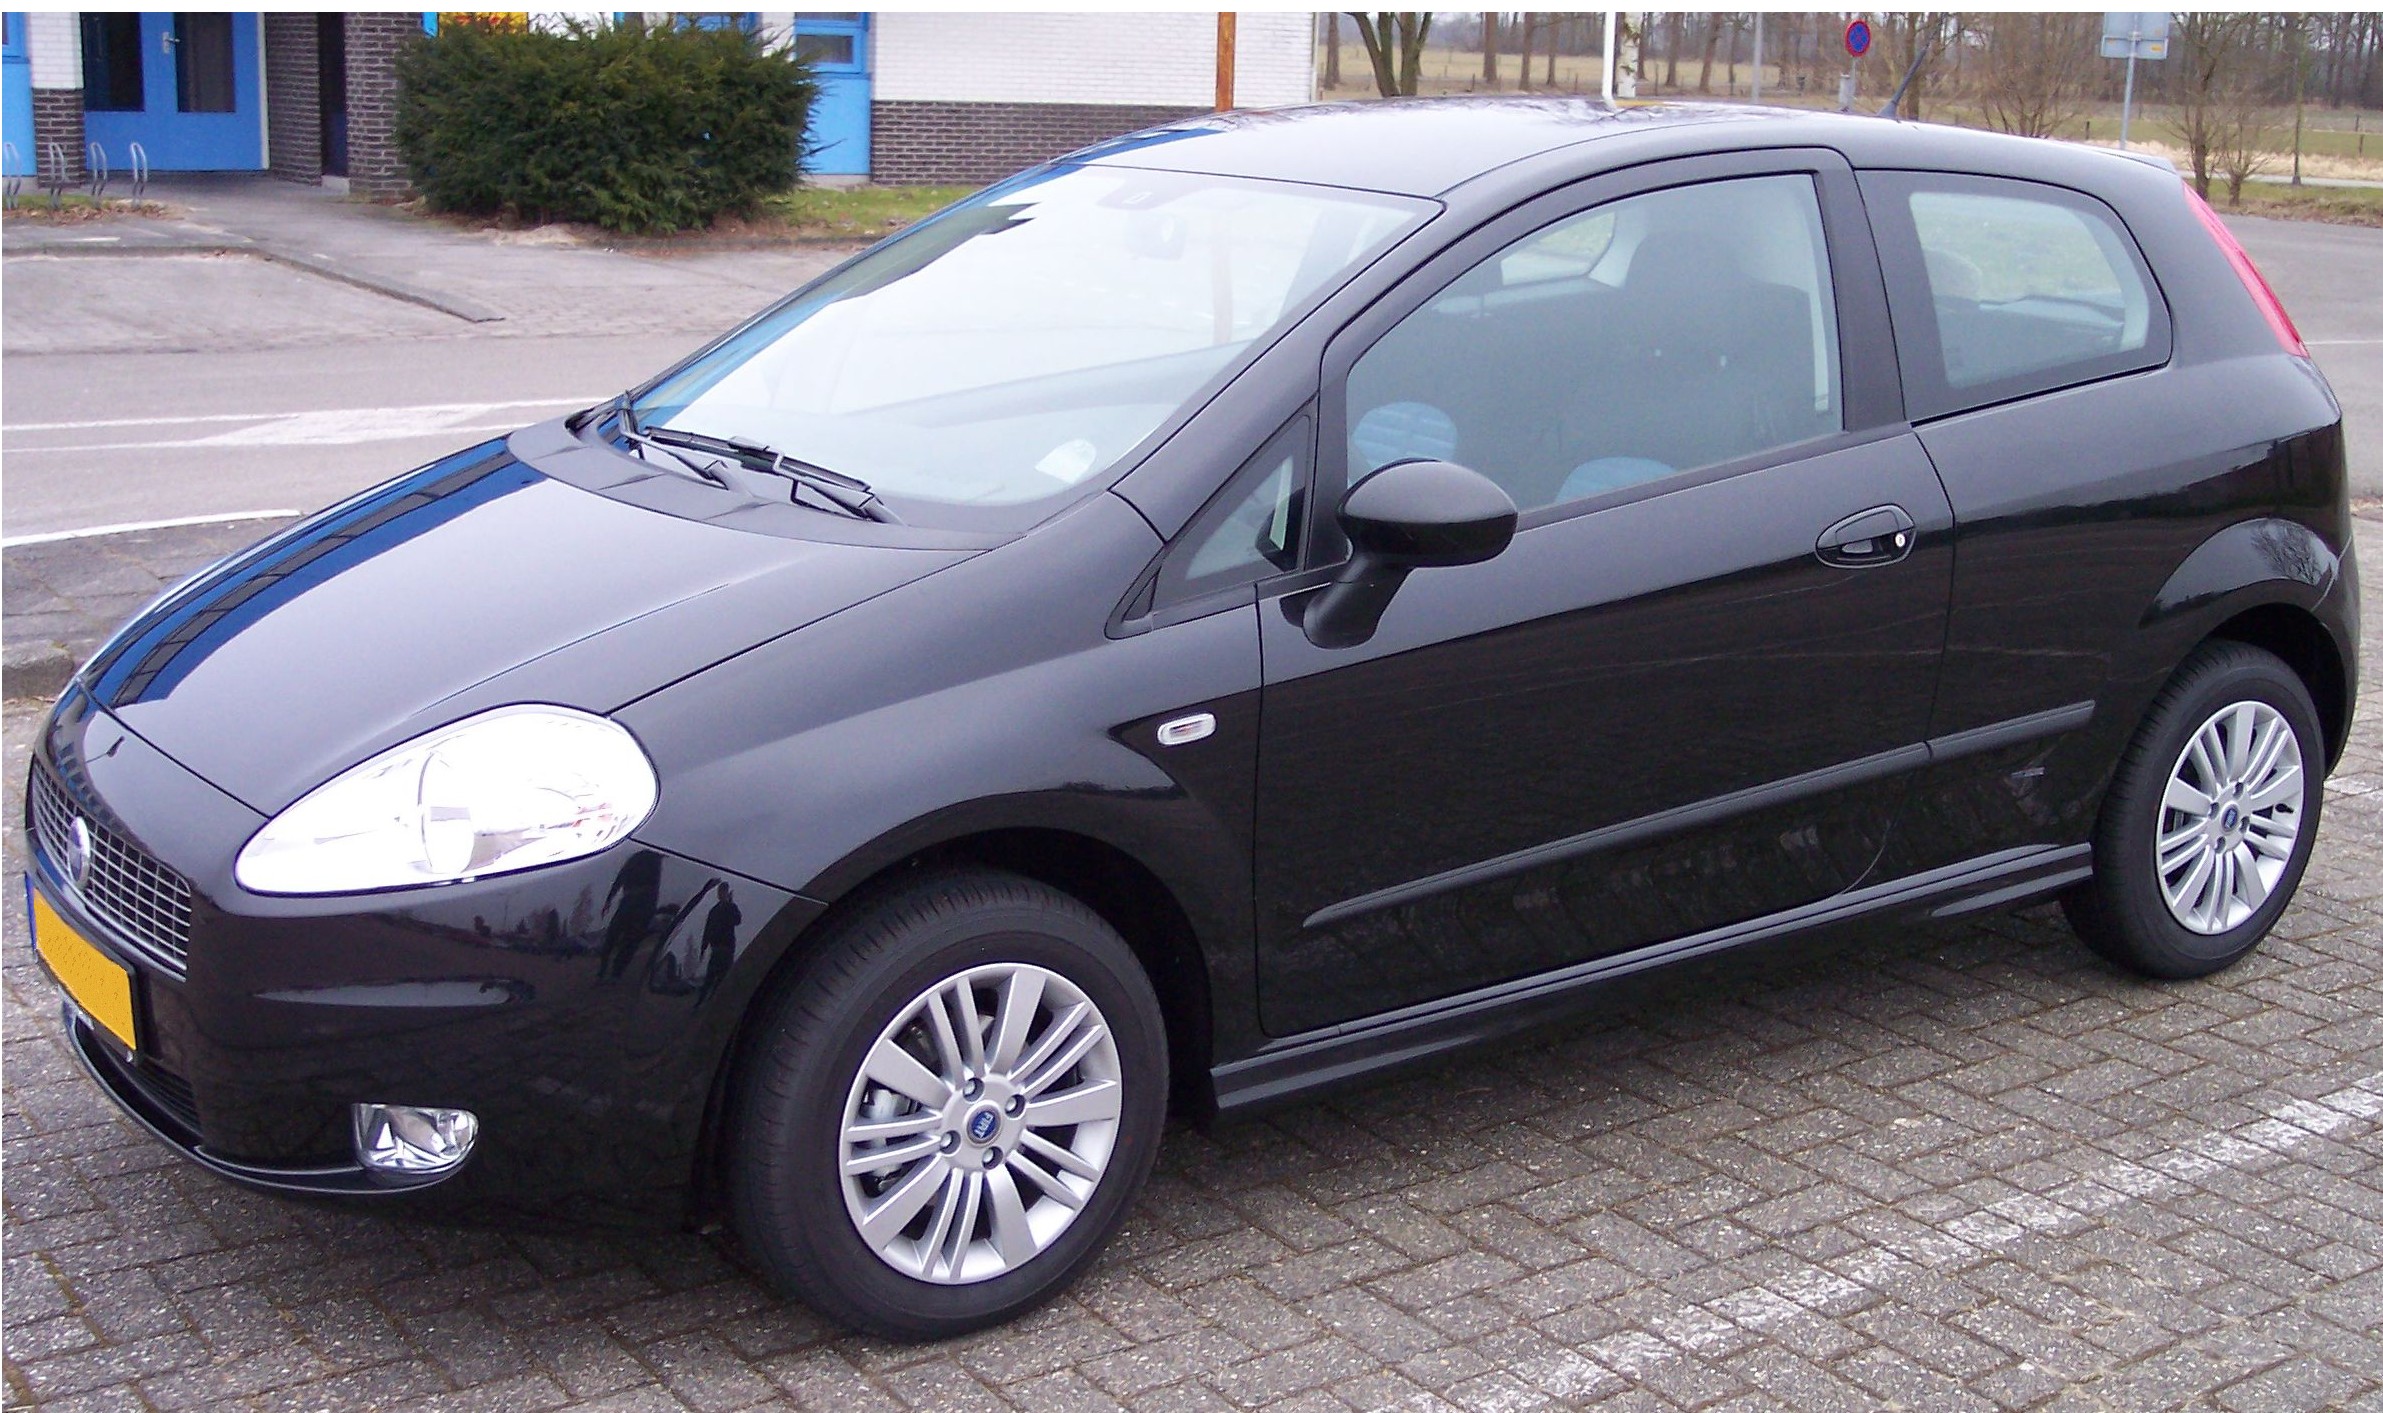 Dossier: Fiat Punto 2006 vl noir - édition.jpg